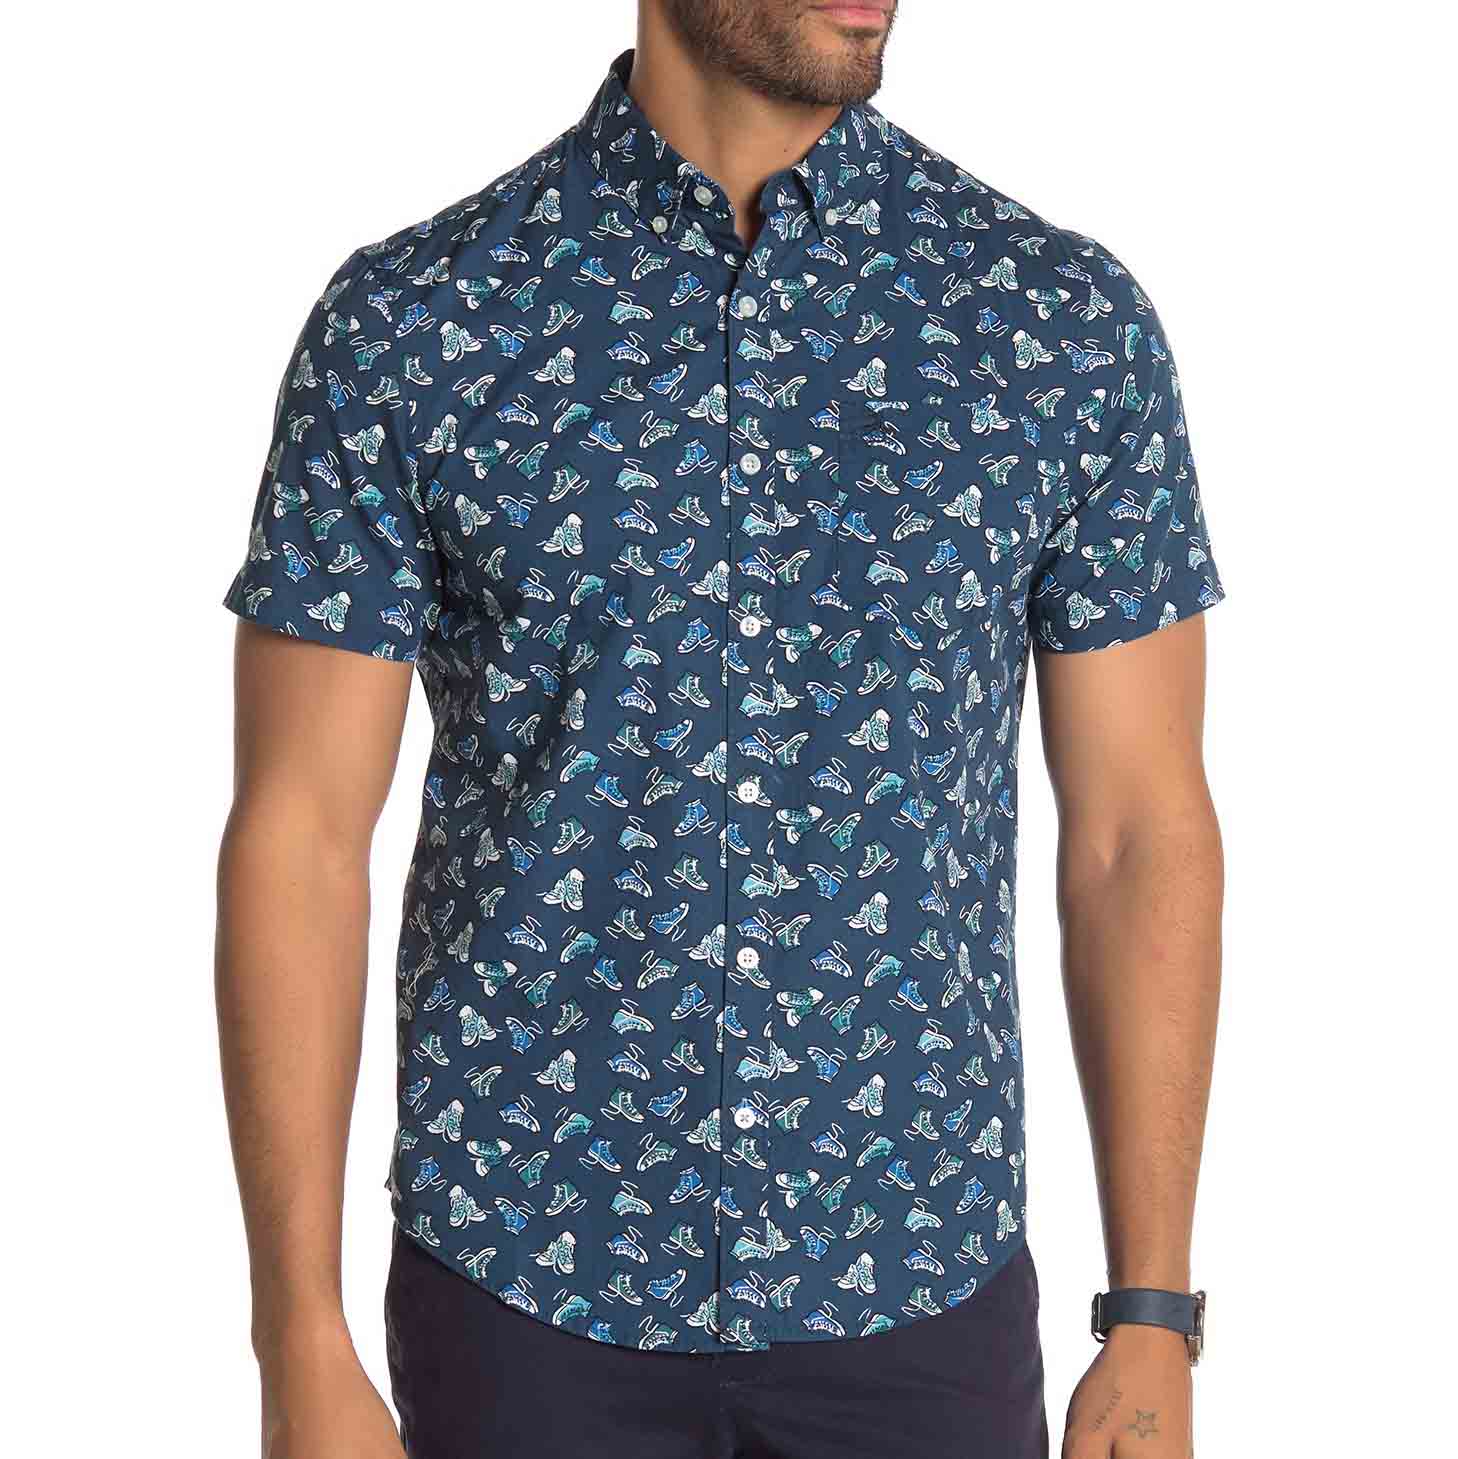 Penguin Atlantic Men's Shirt Button Down Short Sleeve Hawaiian